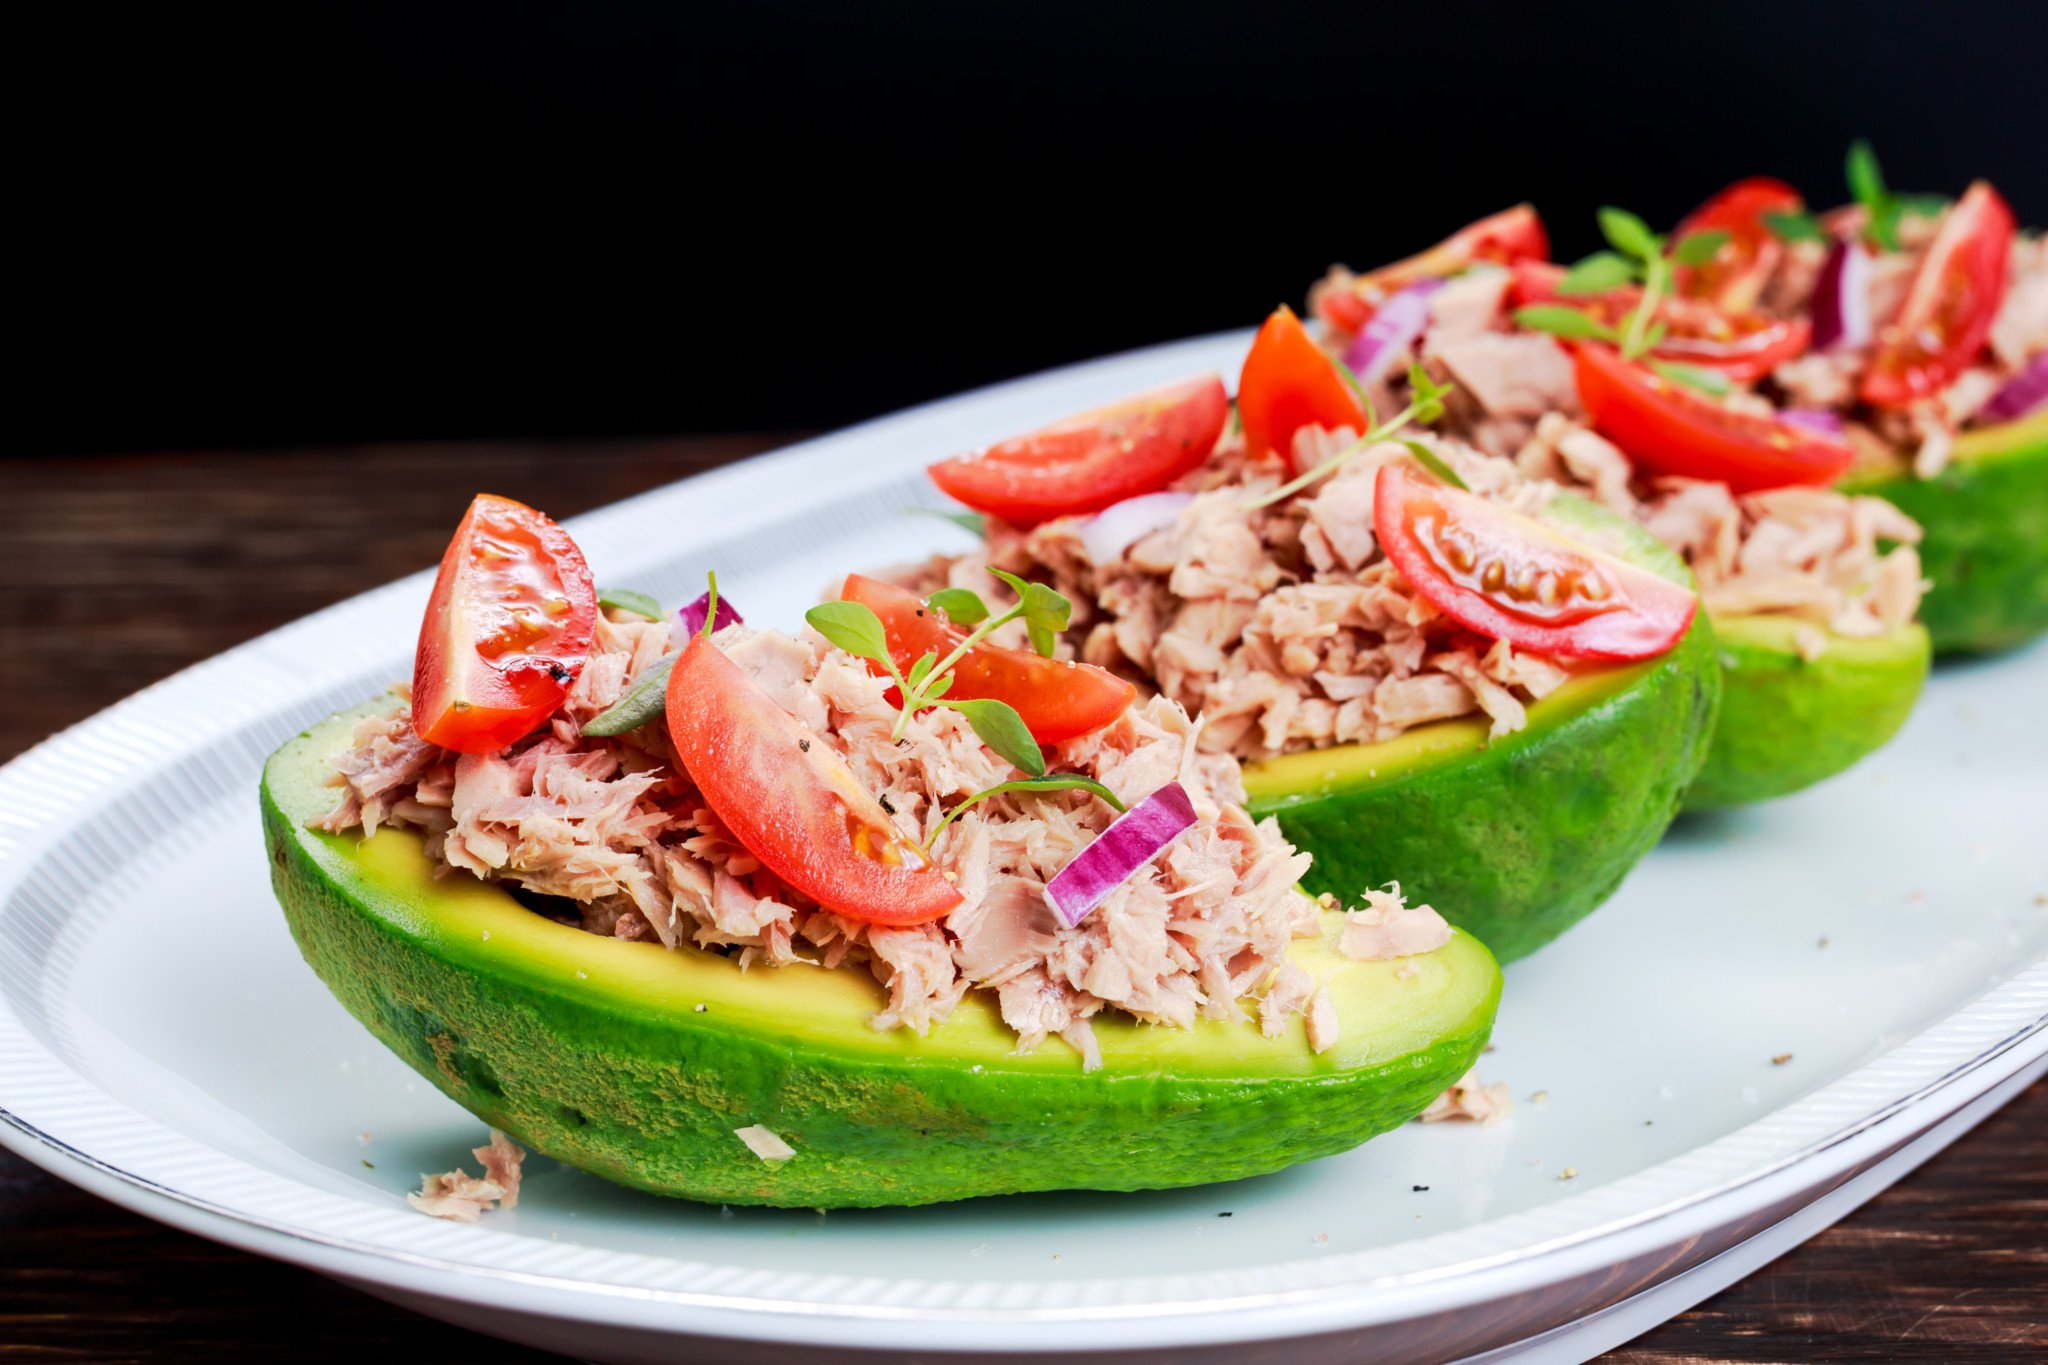 Tuna-Stuffed Avocado Boat Salad